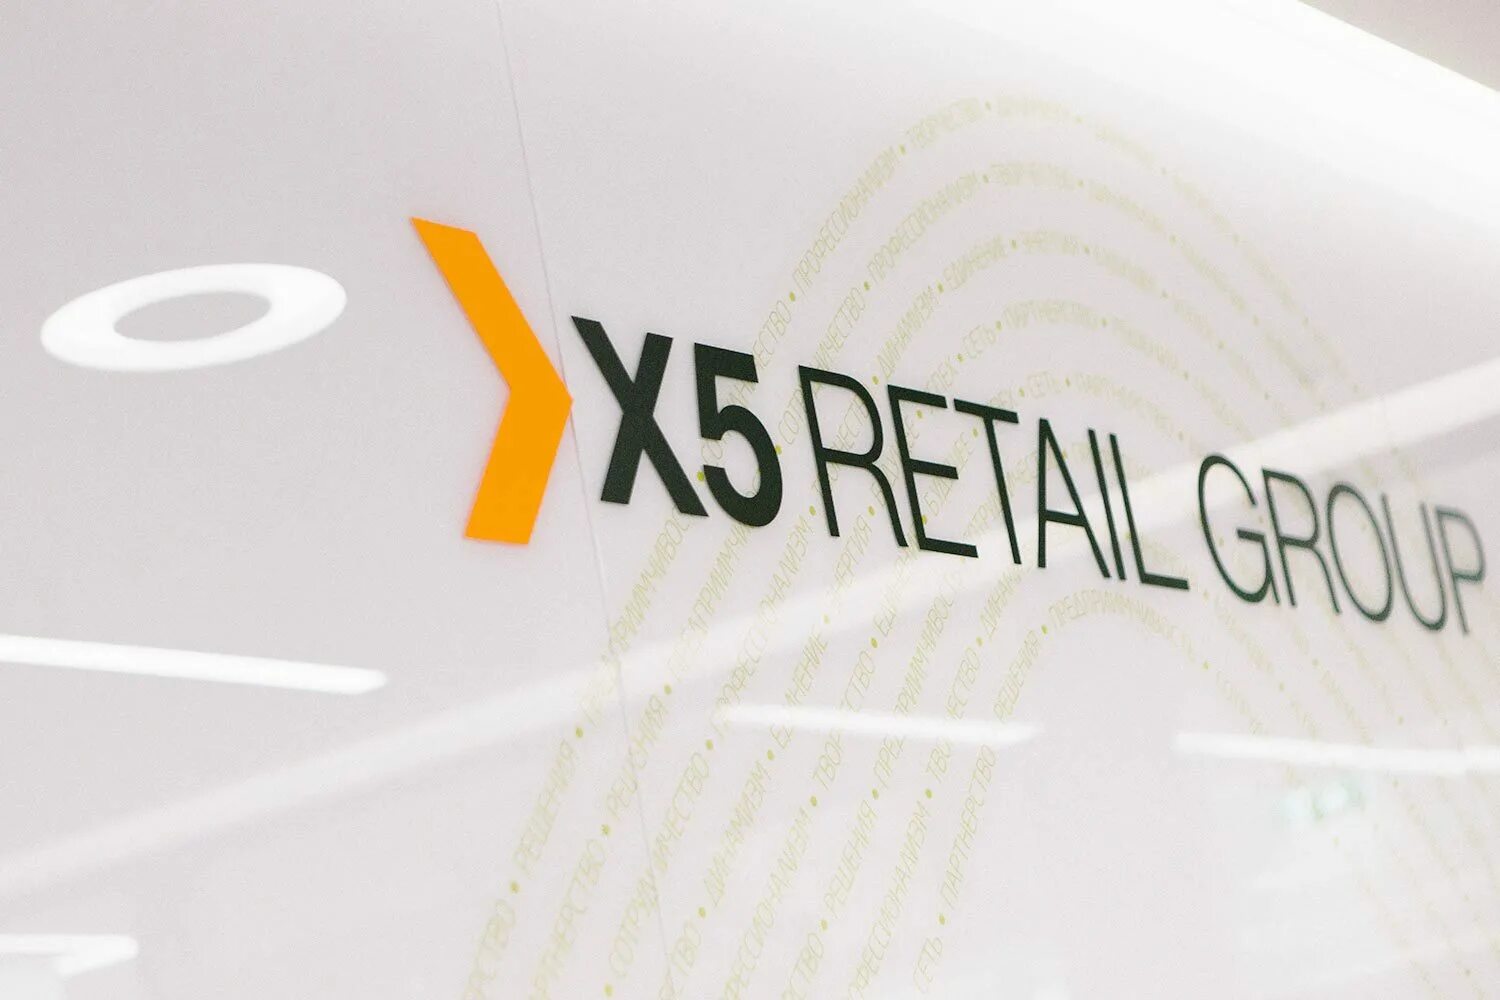 Х5 ритейл групп магазин. Икс 5 Ритейл групп. Х5 Ритейл групп Пятерочка. X5 Group logo. X5 Retail Group логотип.